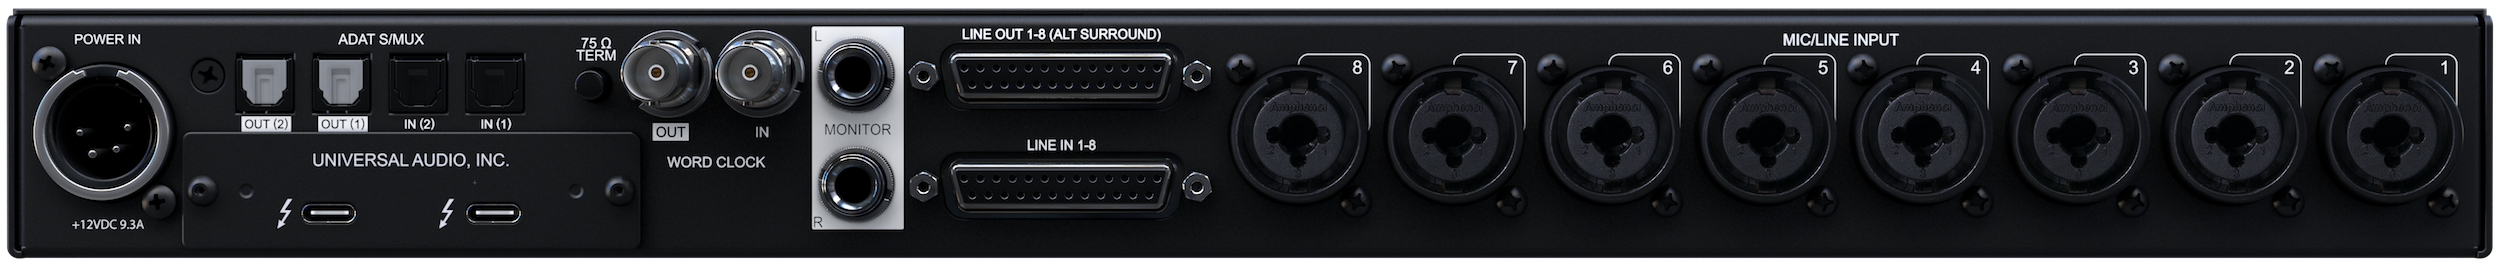 Universal Audio Apollo X8p - Thunderbolt audio interface - Variation 2